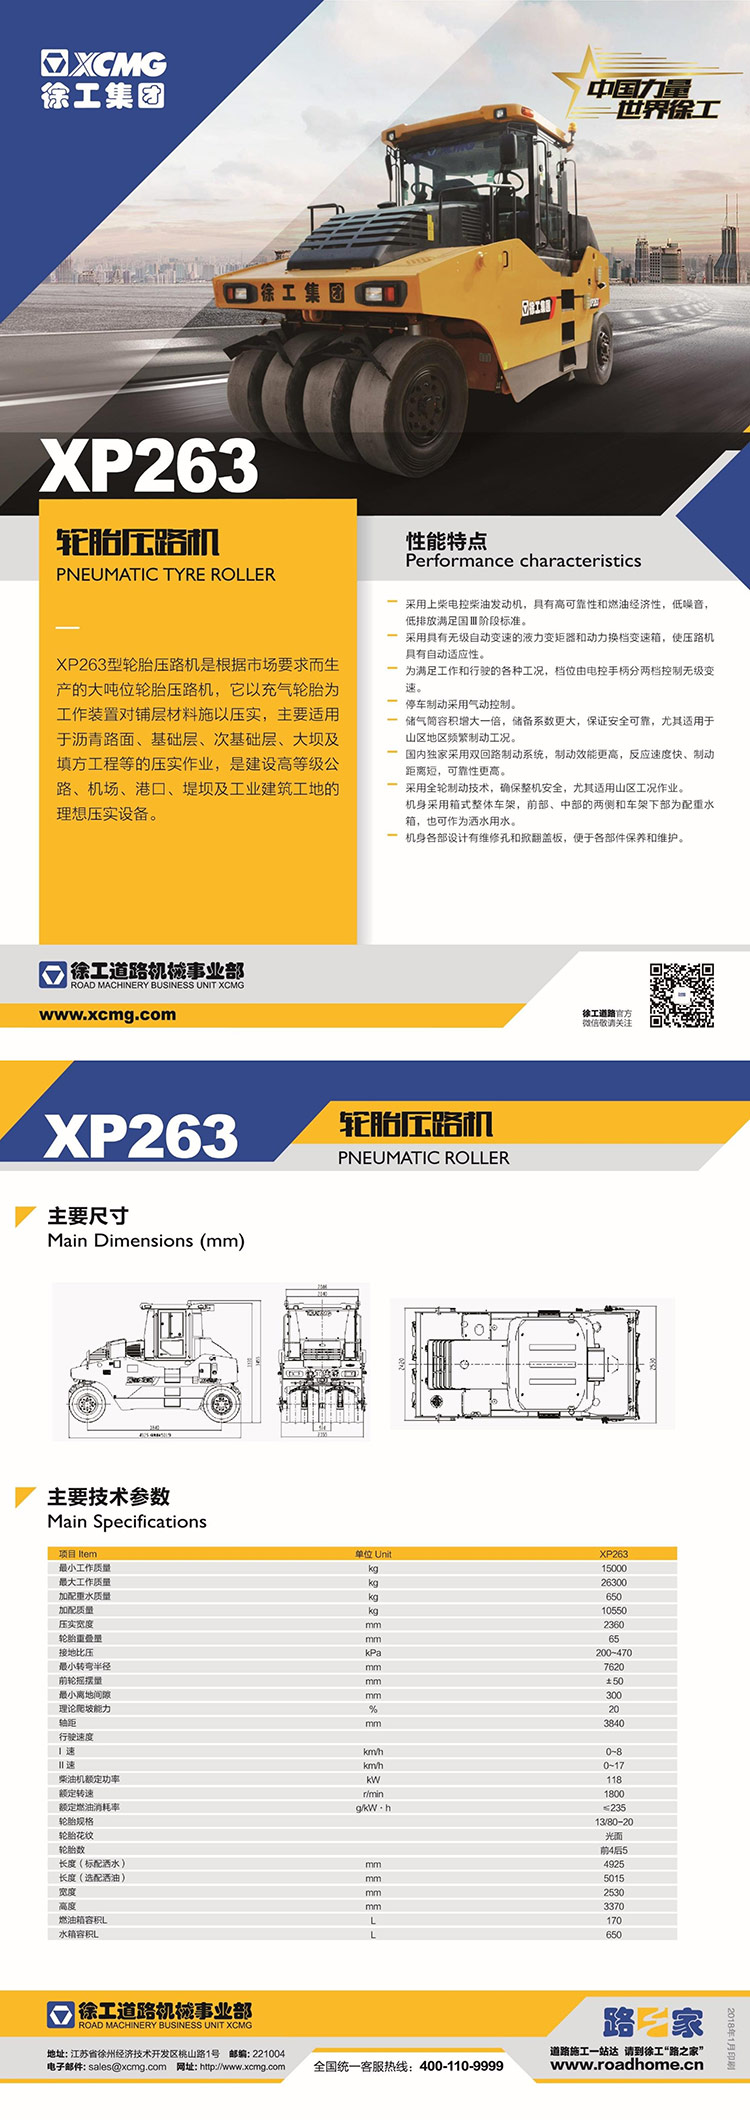 XP263.jpg